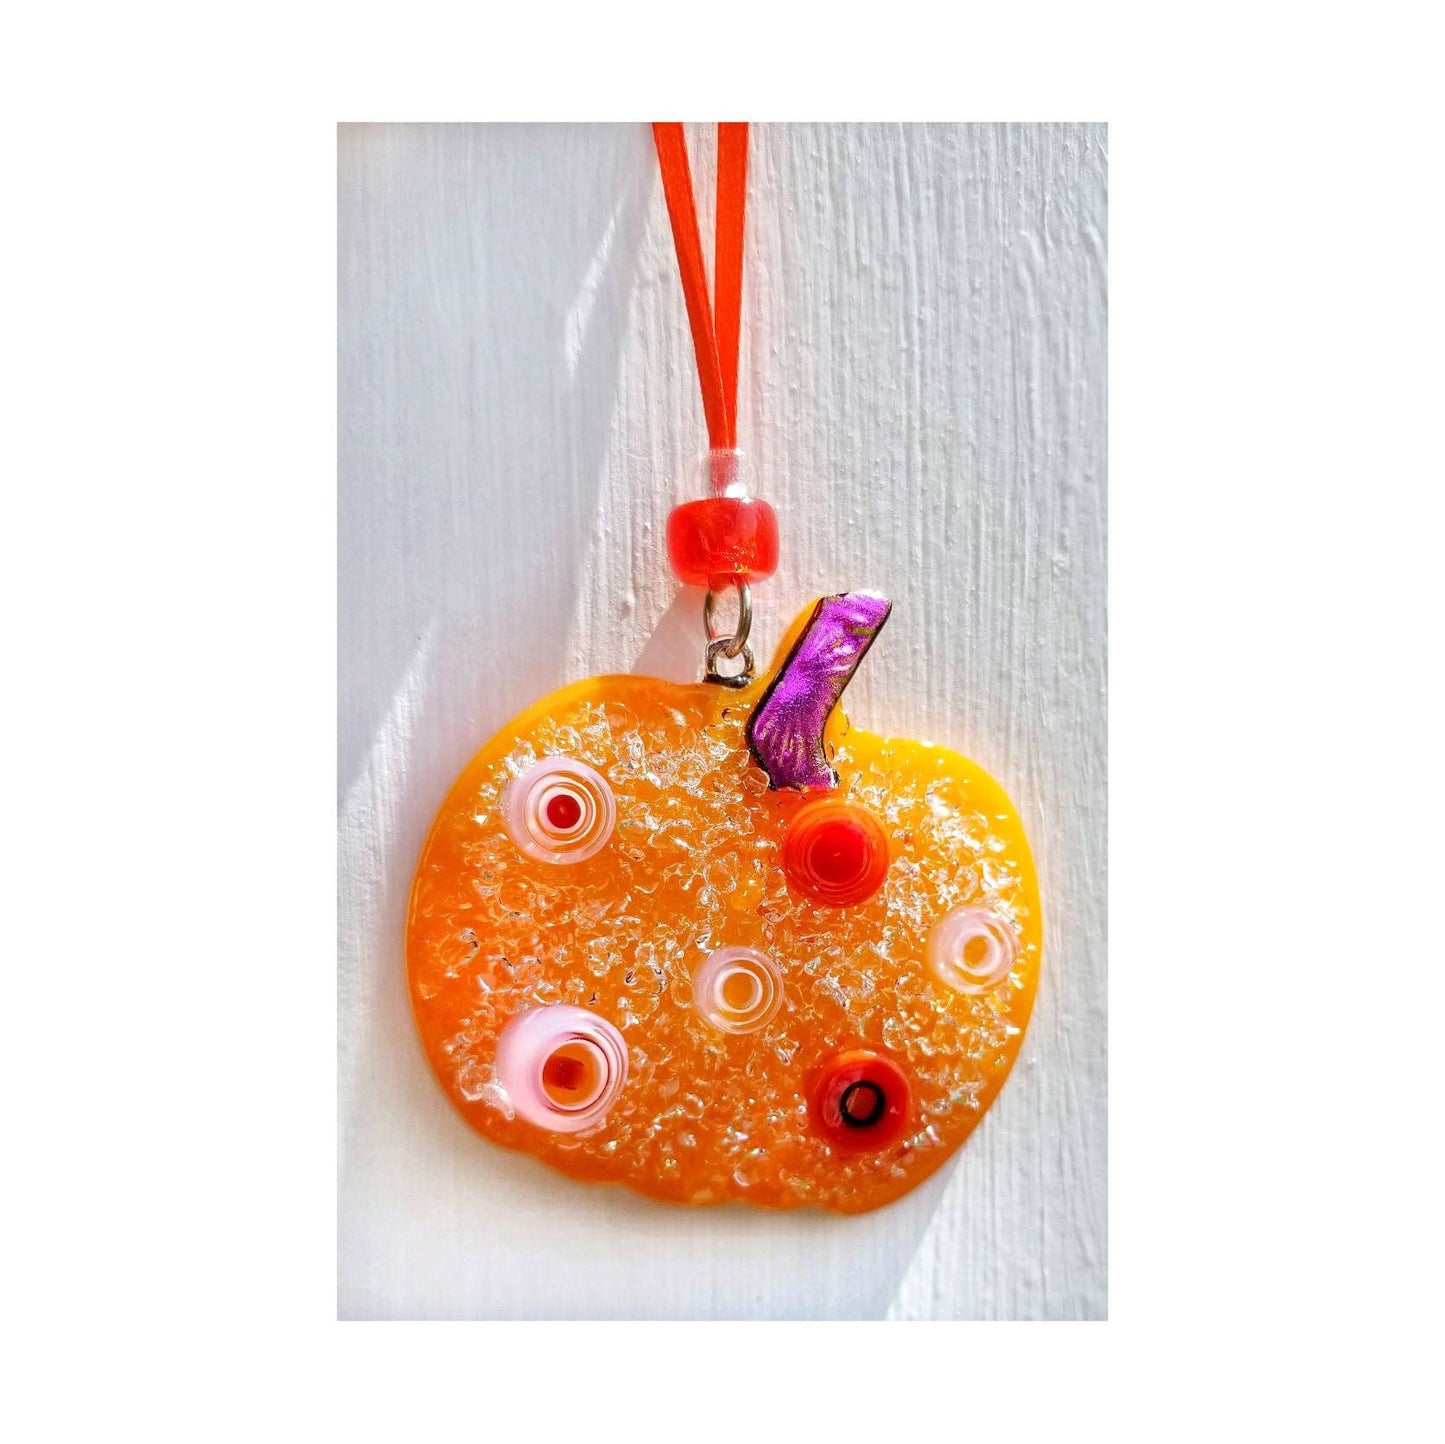 Fused glass Pumpkin Ornament. Gift tag, pendant, window hanging. Halloween decor, fall suncatcher. Purse, lanyard charm. Free shipping.